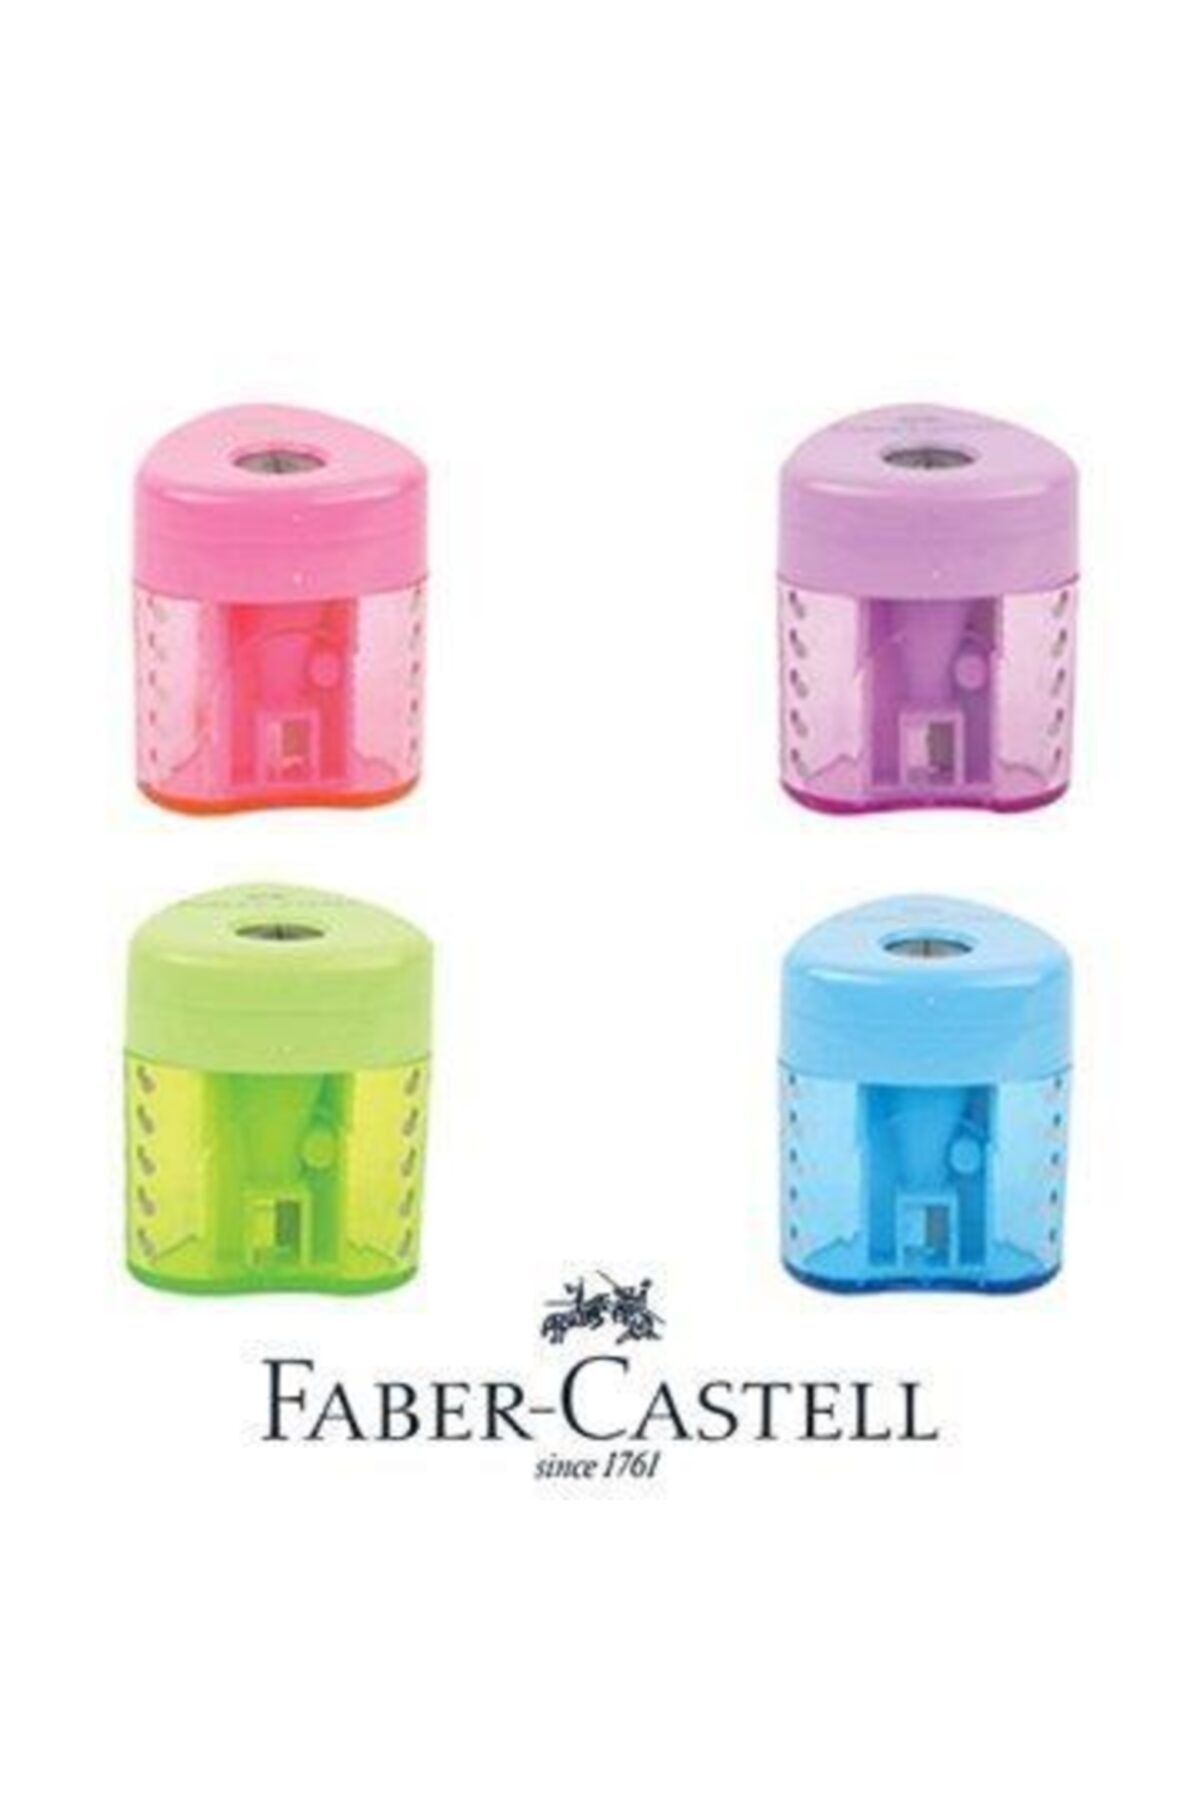 Faber Castell Grip Auto Canlı Renkler Kalemtraş 2 Adet